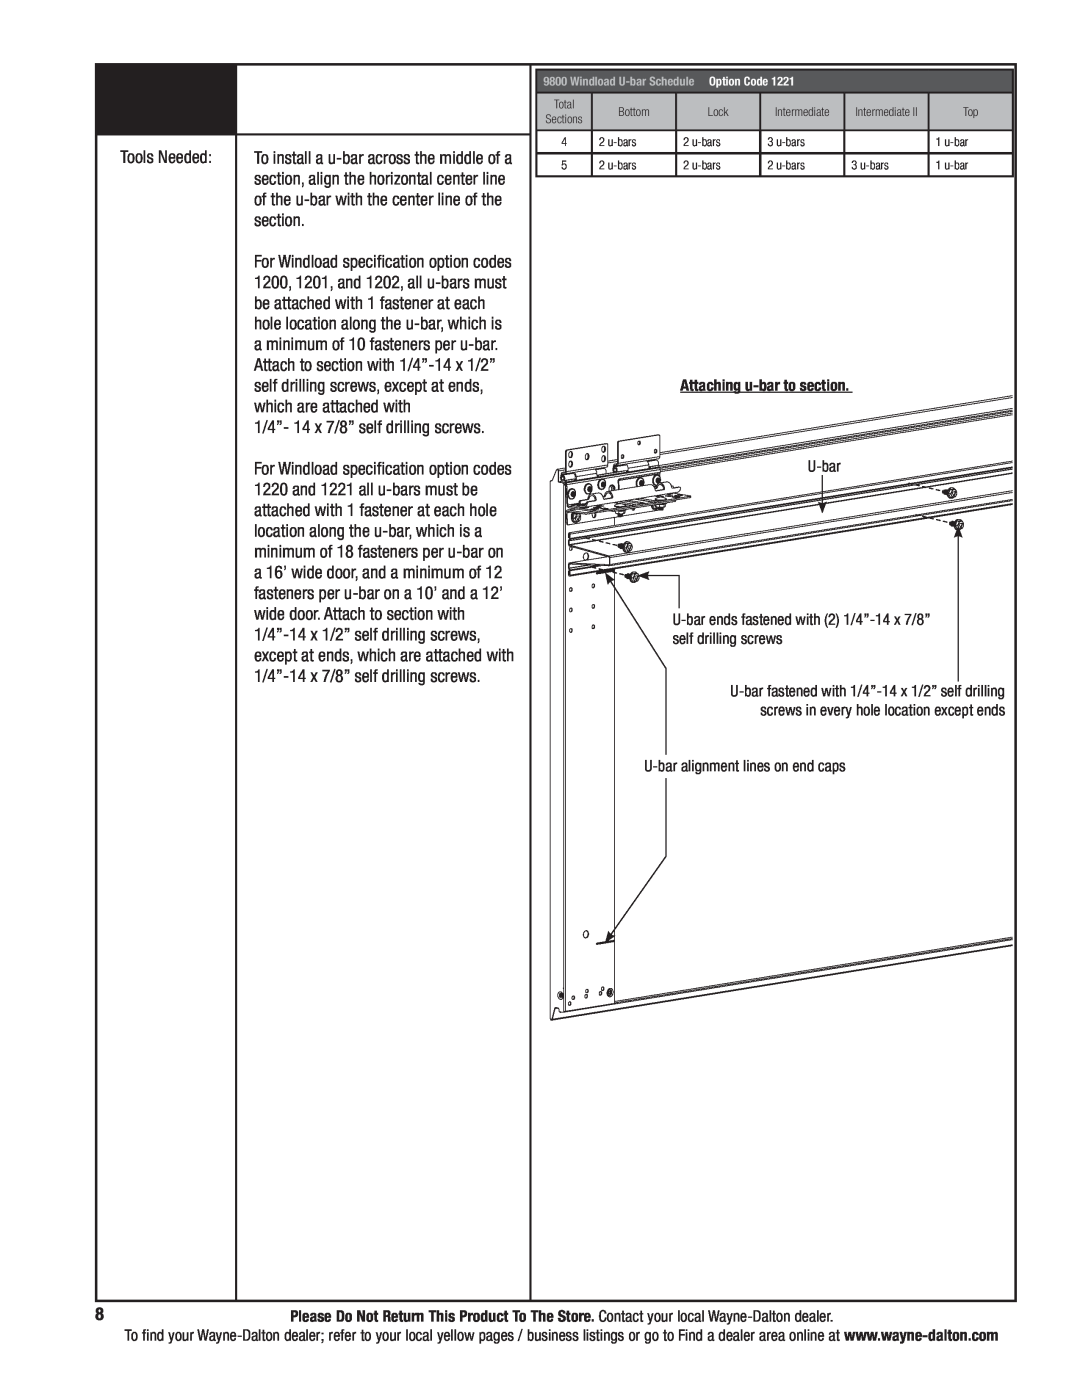 Wayne-Dalton 9800 Tools Needed, 1/4”- 14 x 7/8” self drilling screws, Attaching u-barto section U-bar 